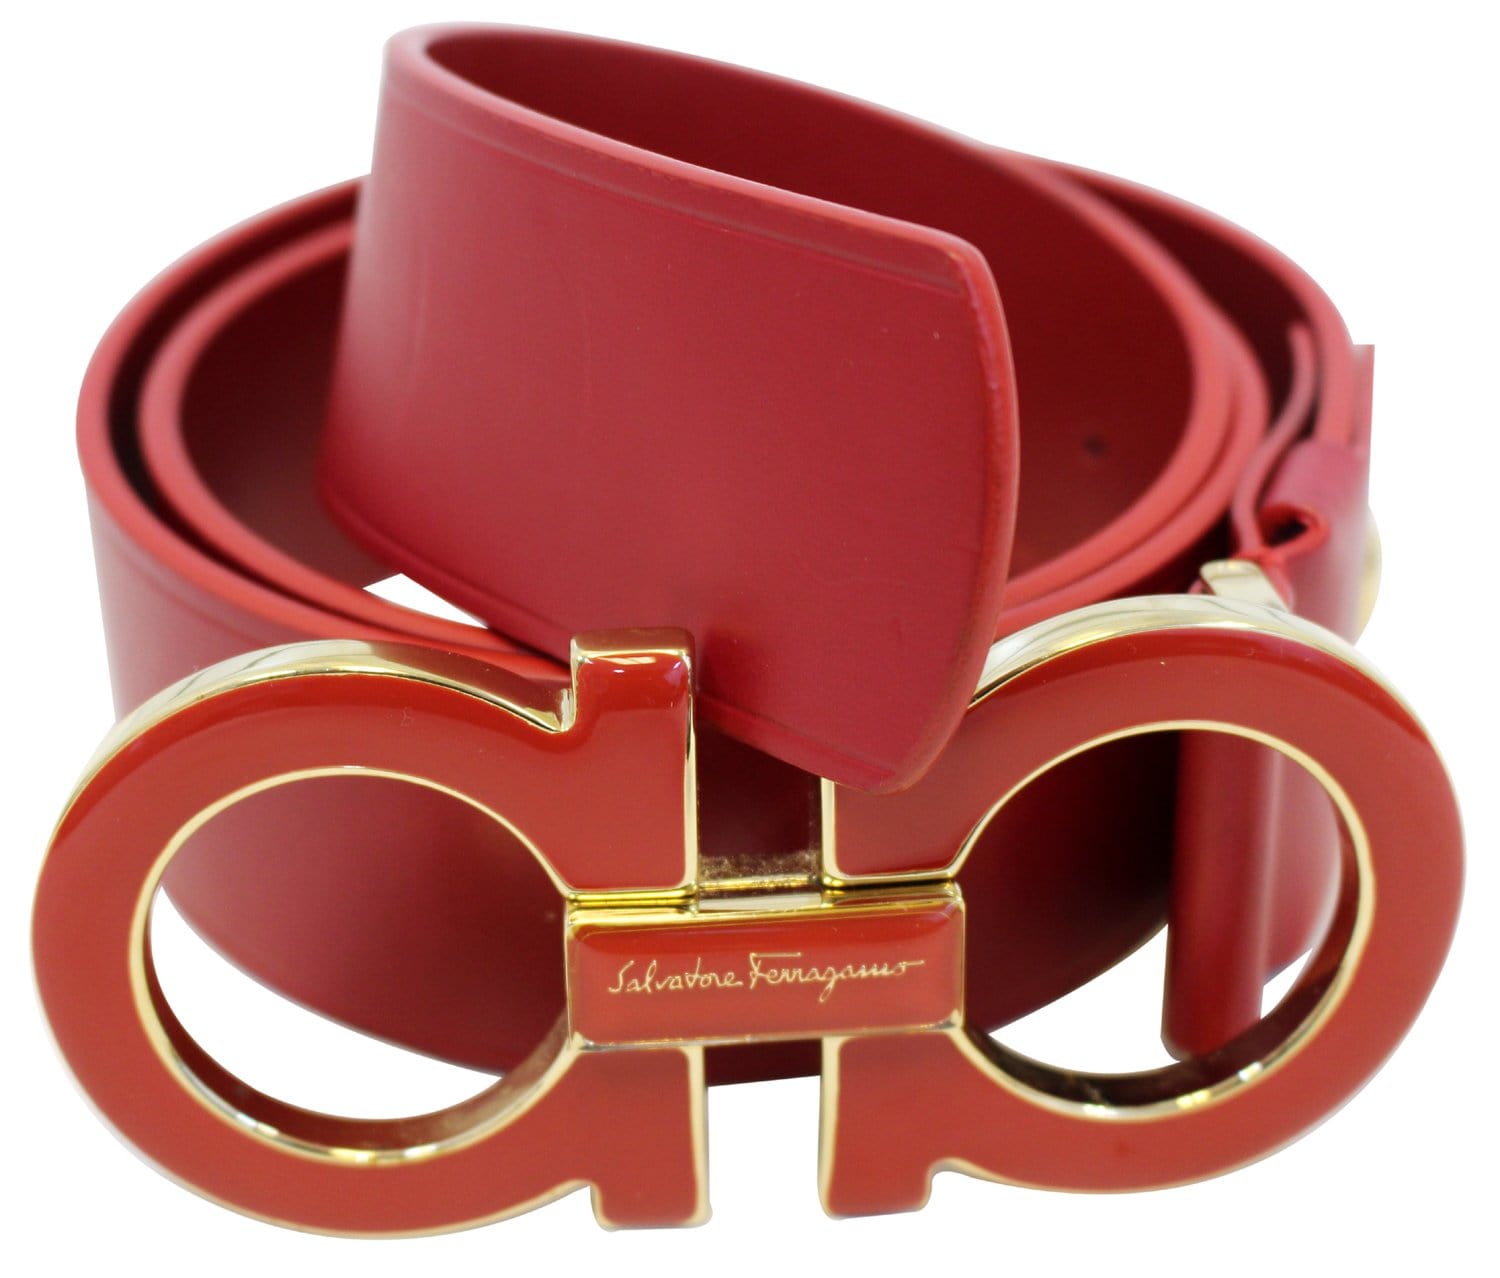 Salvatore Ferragamo Blue / Red Calfino Soft Leather Reversible Belt Size  42**NEW